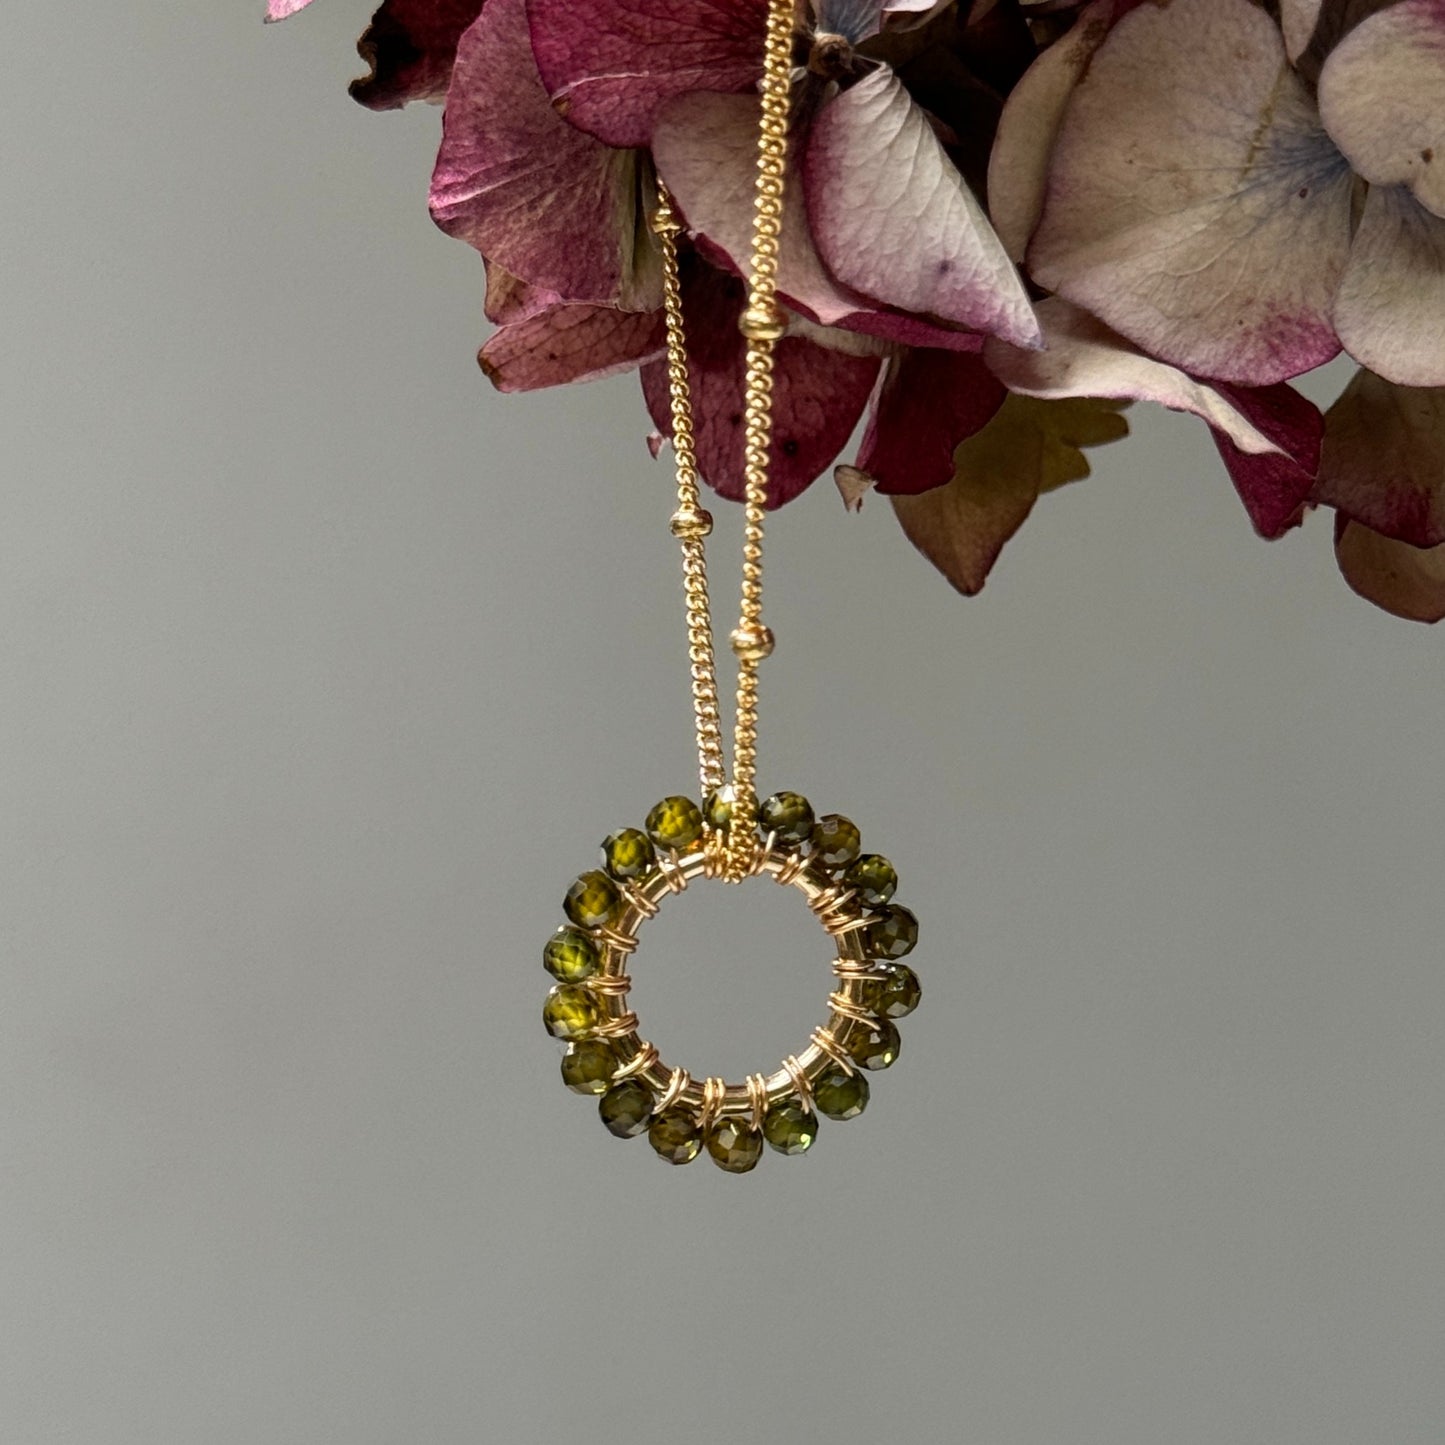 Olive Green Peridot (Midi Bead) Pendant Necklace